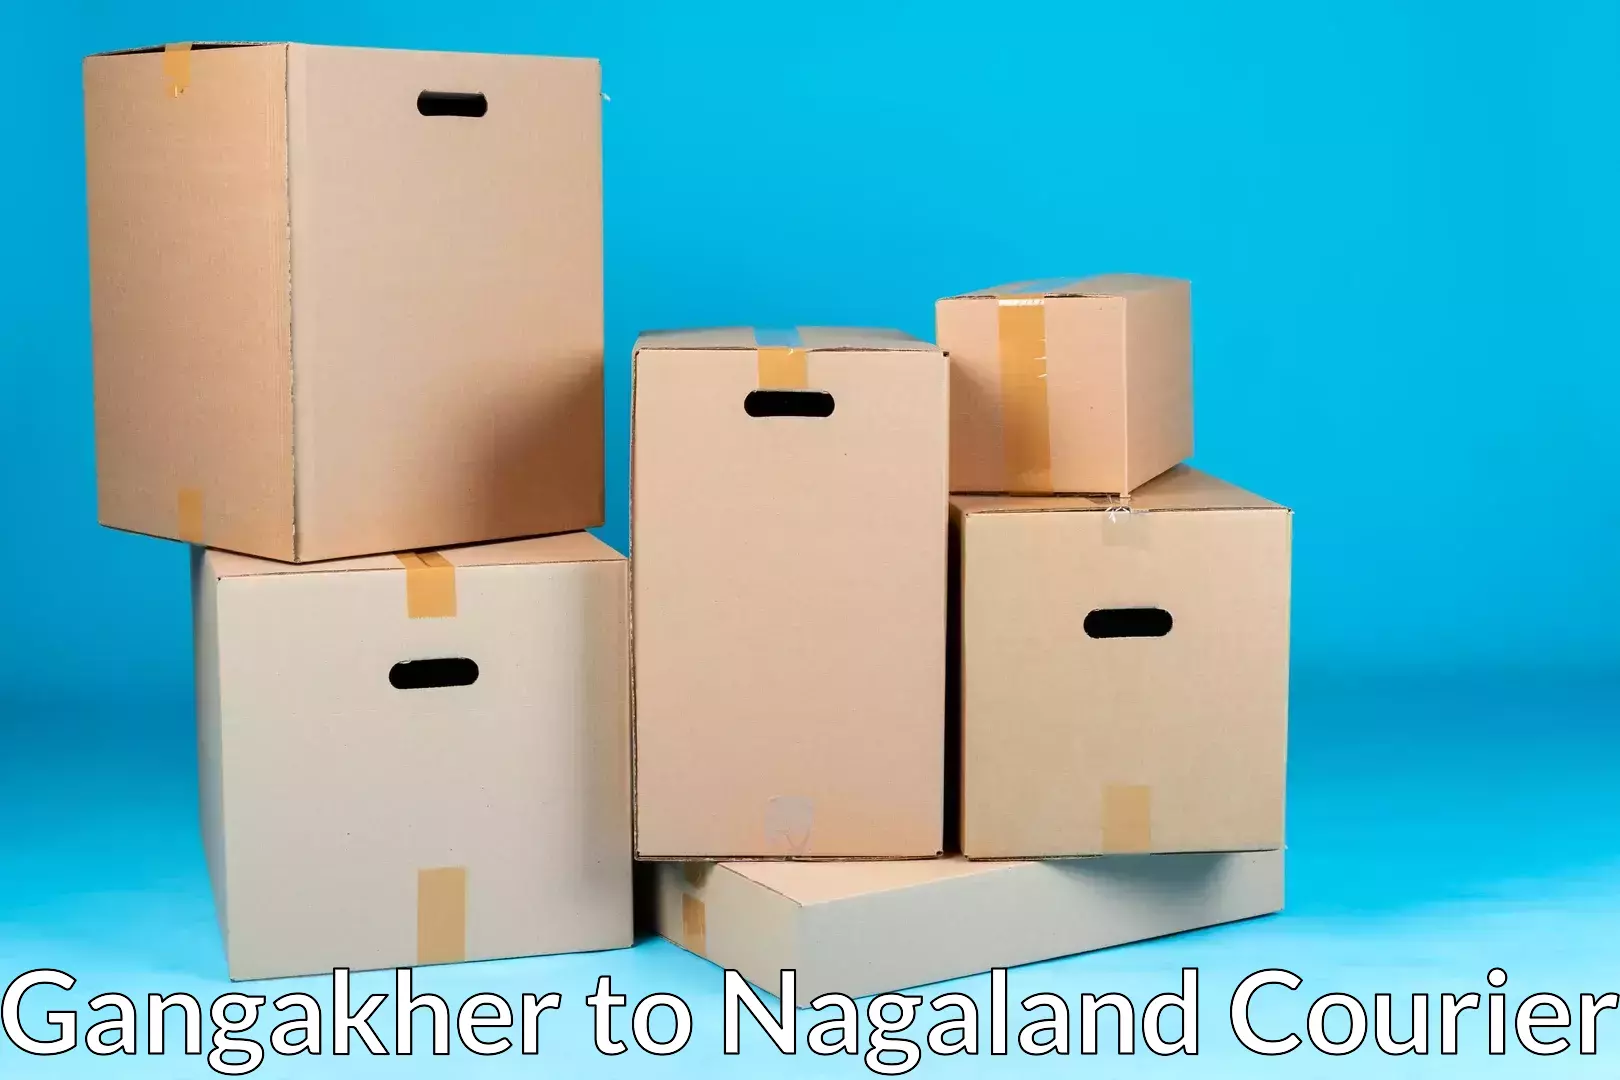 Professional moving company Gangakher to Nagaland